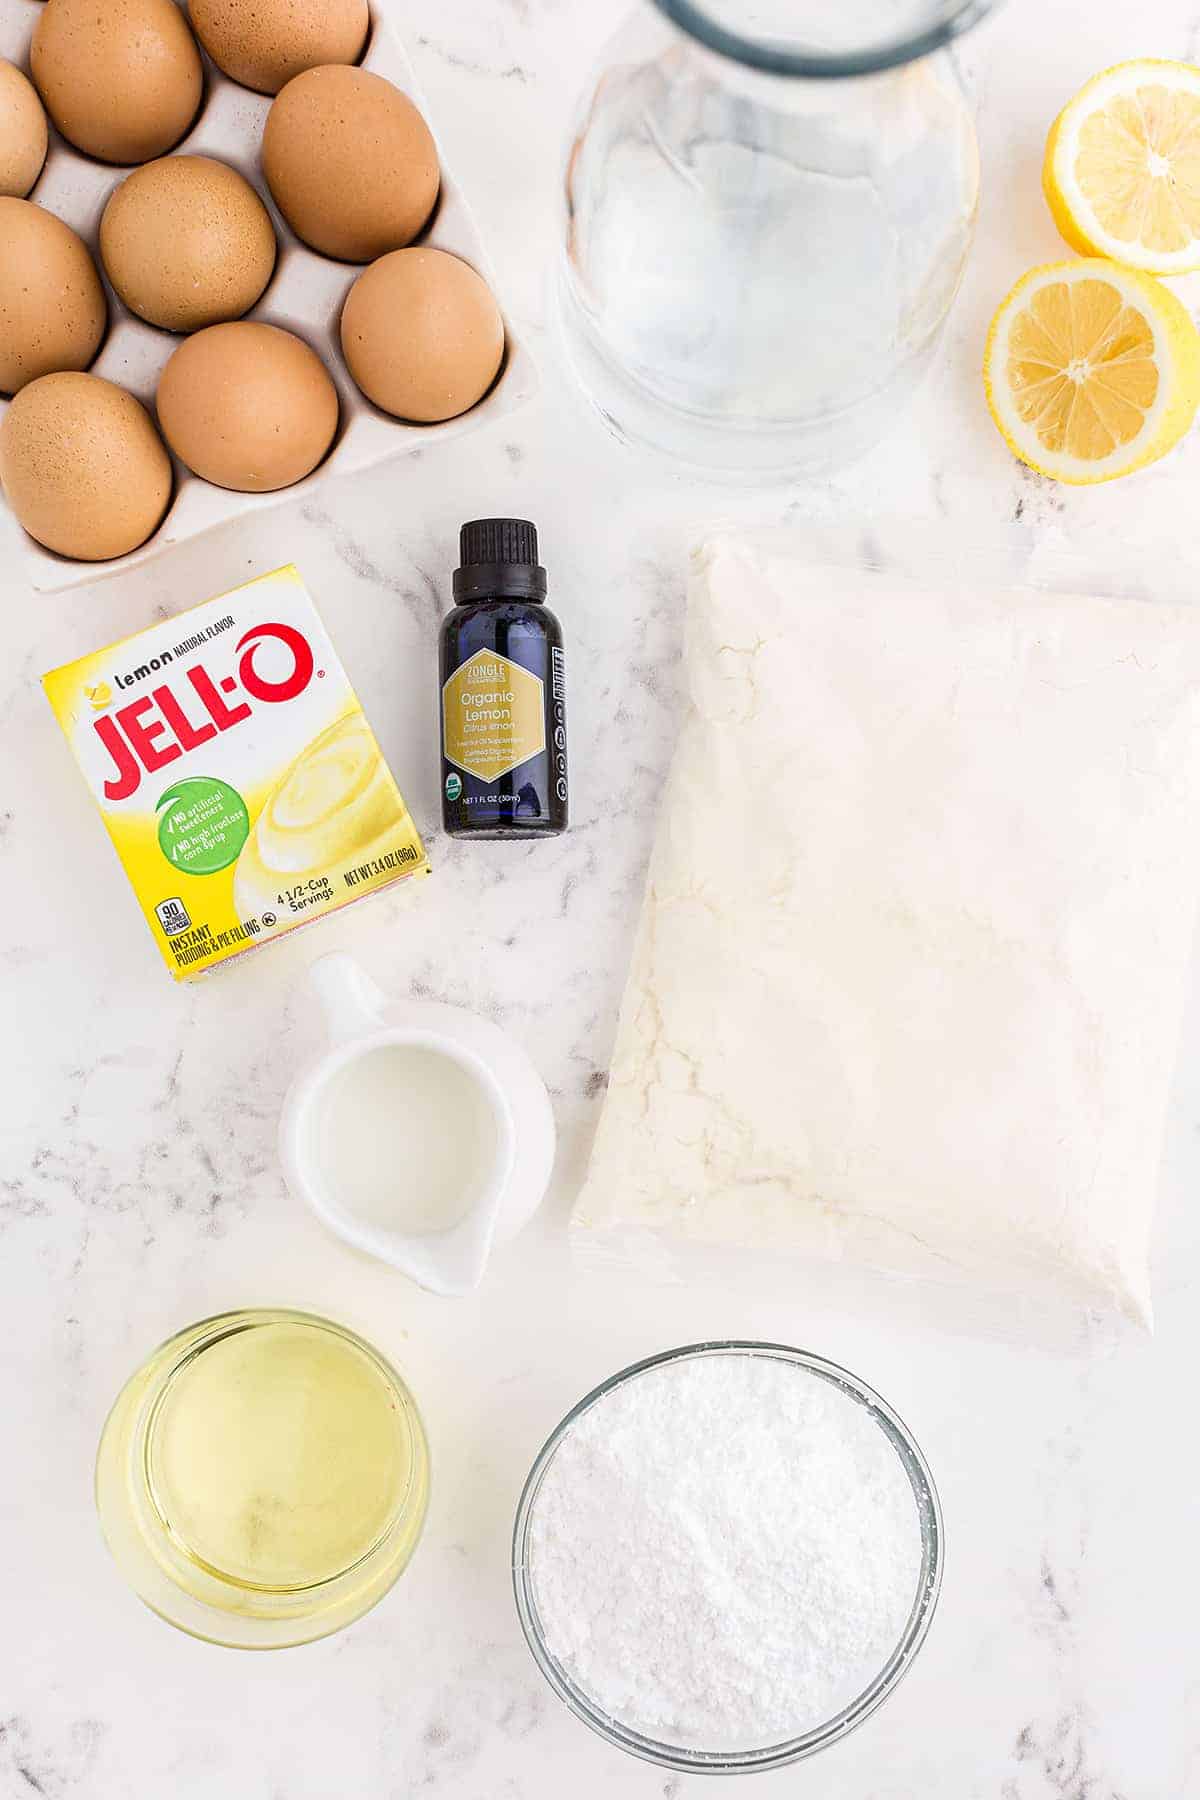 ingredients for lemon bundt cake on white background.